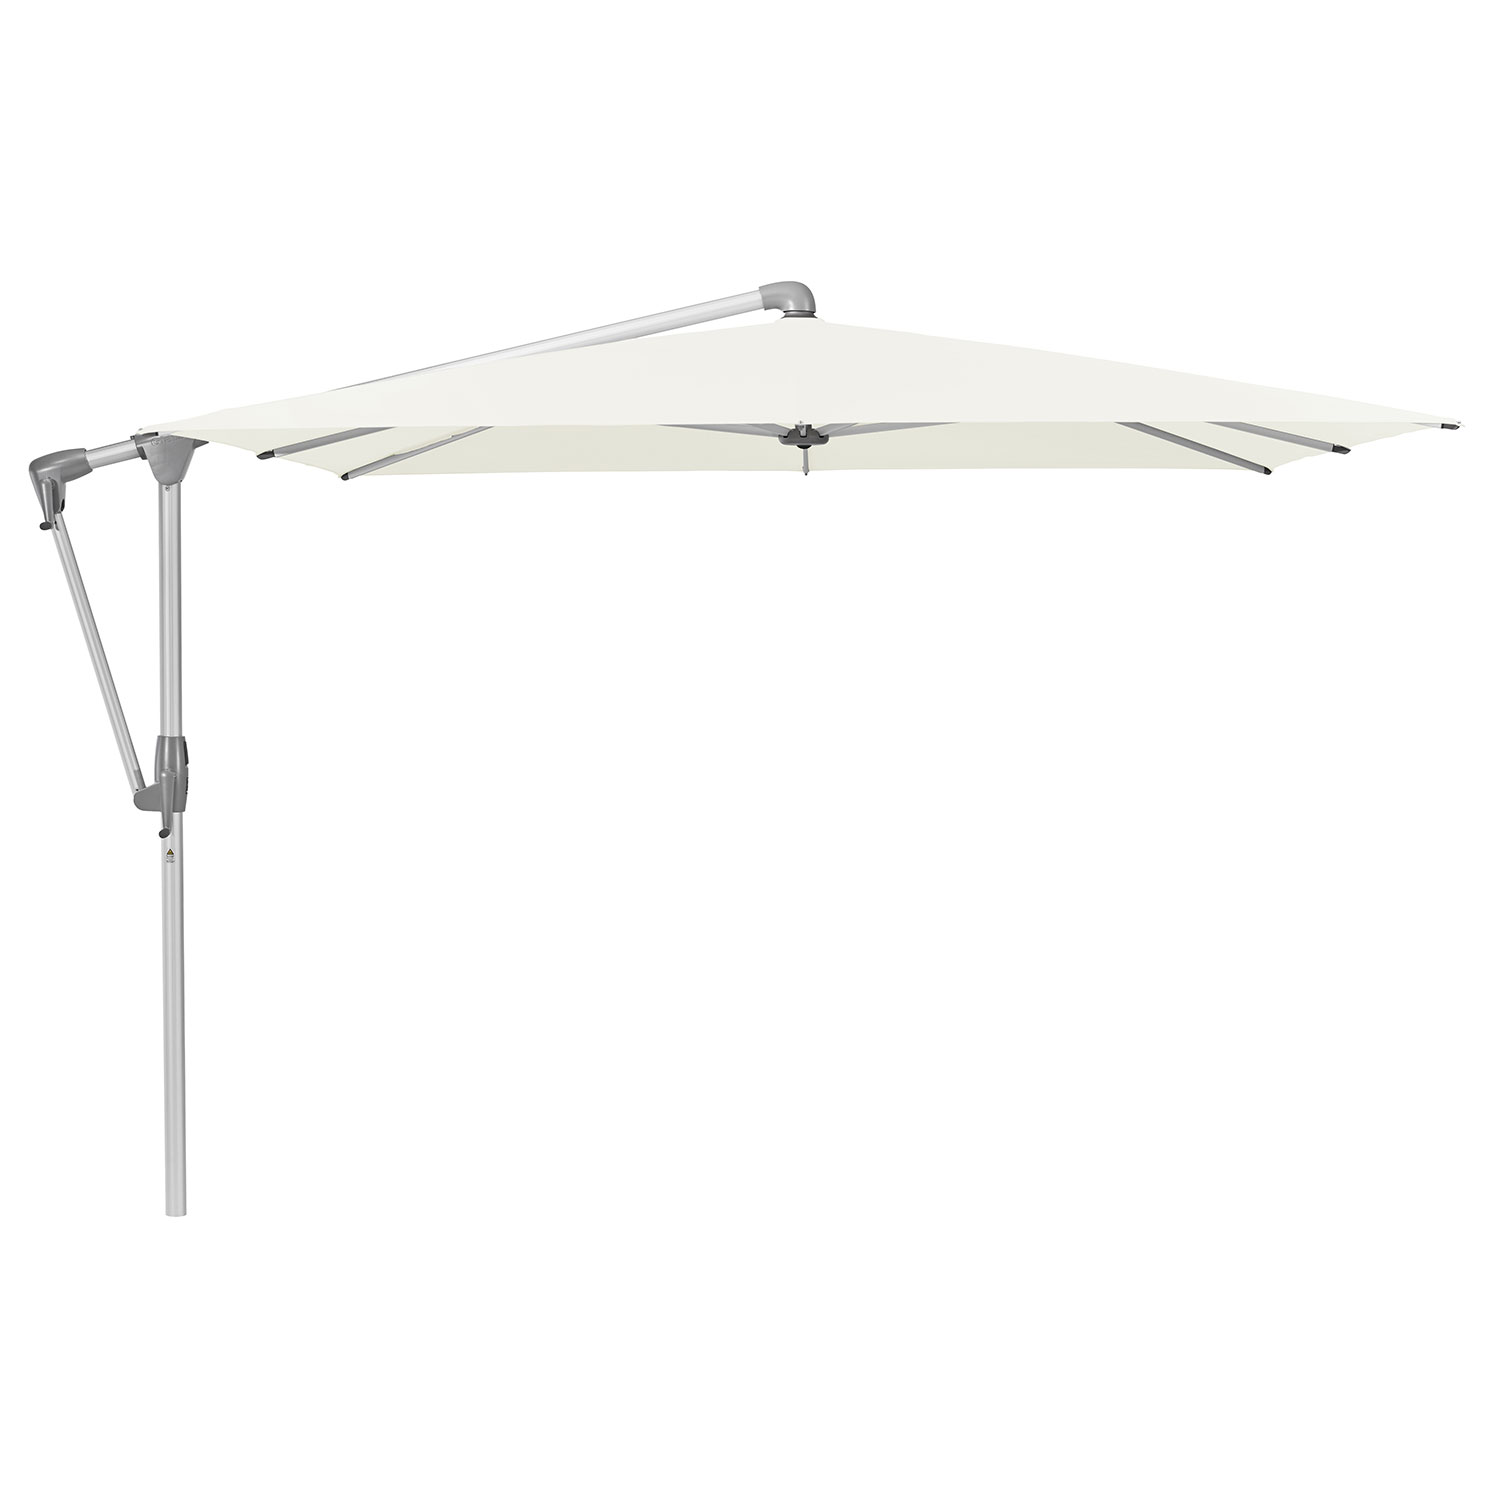 Sunwing Casa frihängande parasoll 300×240 cm kat.5 anodizerad alu / 510 white Glatz